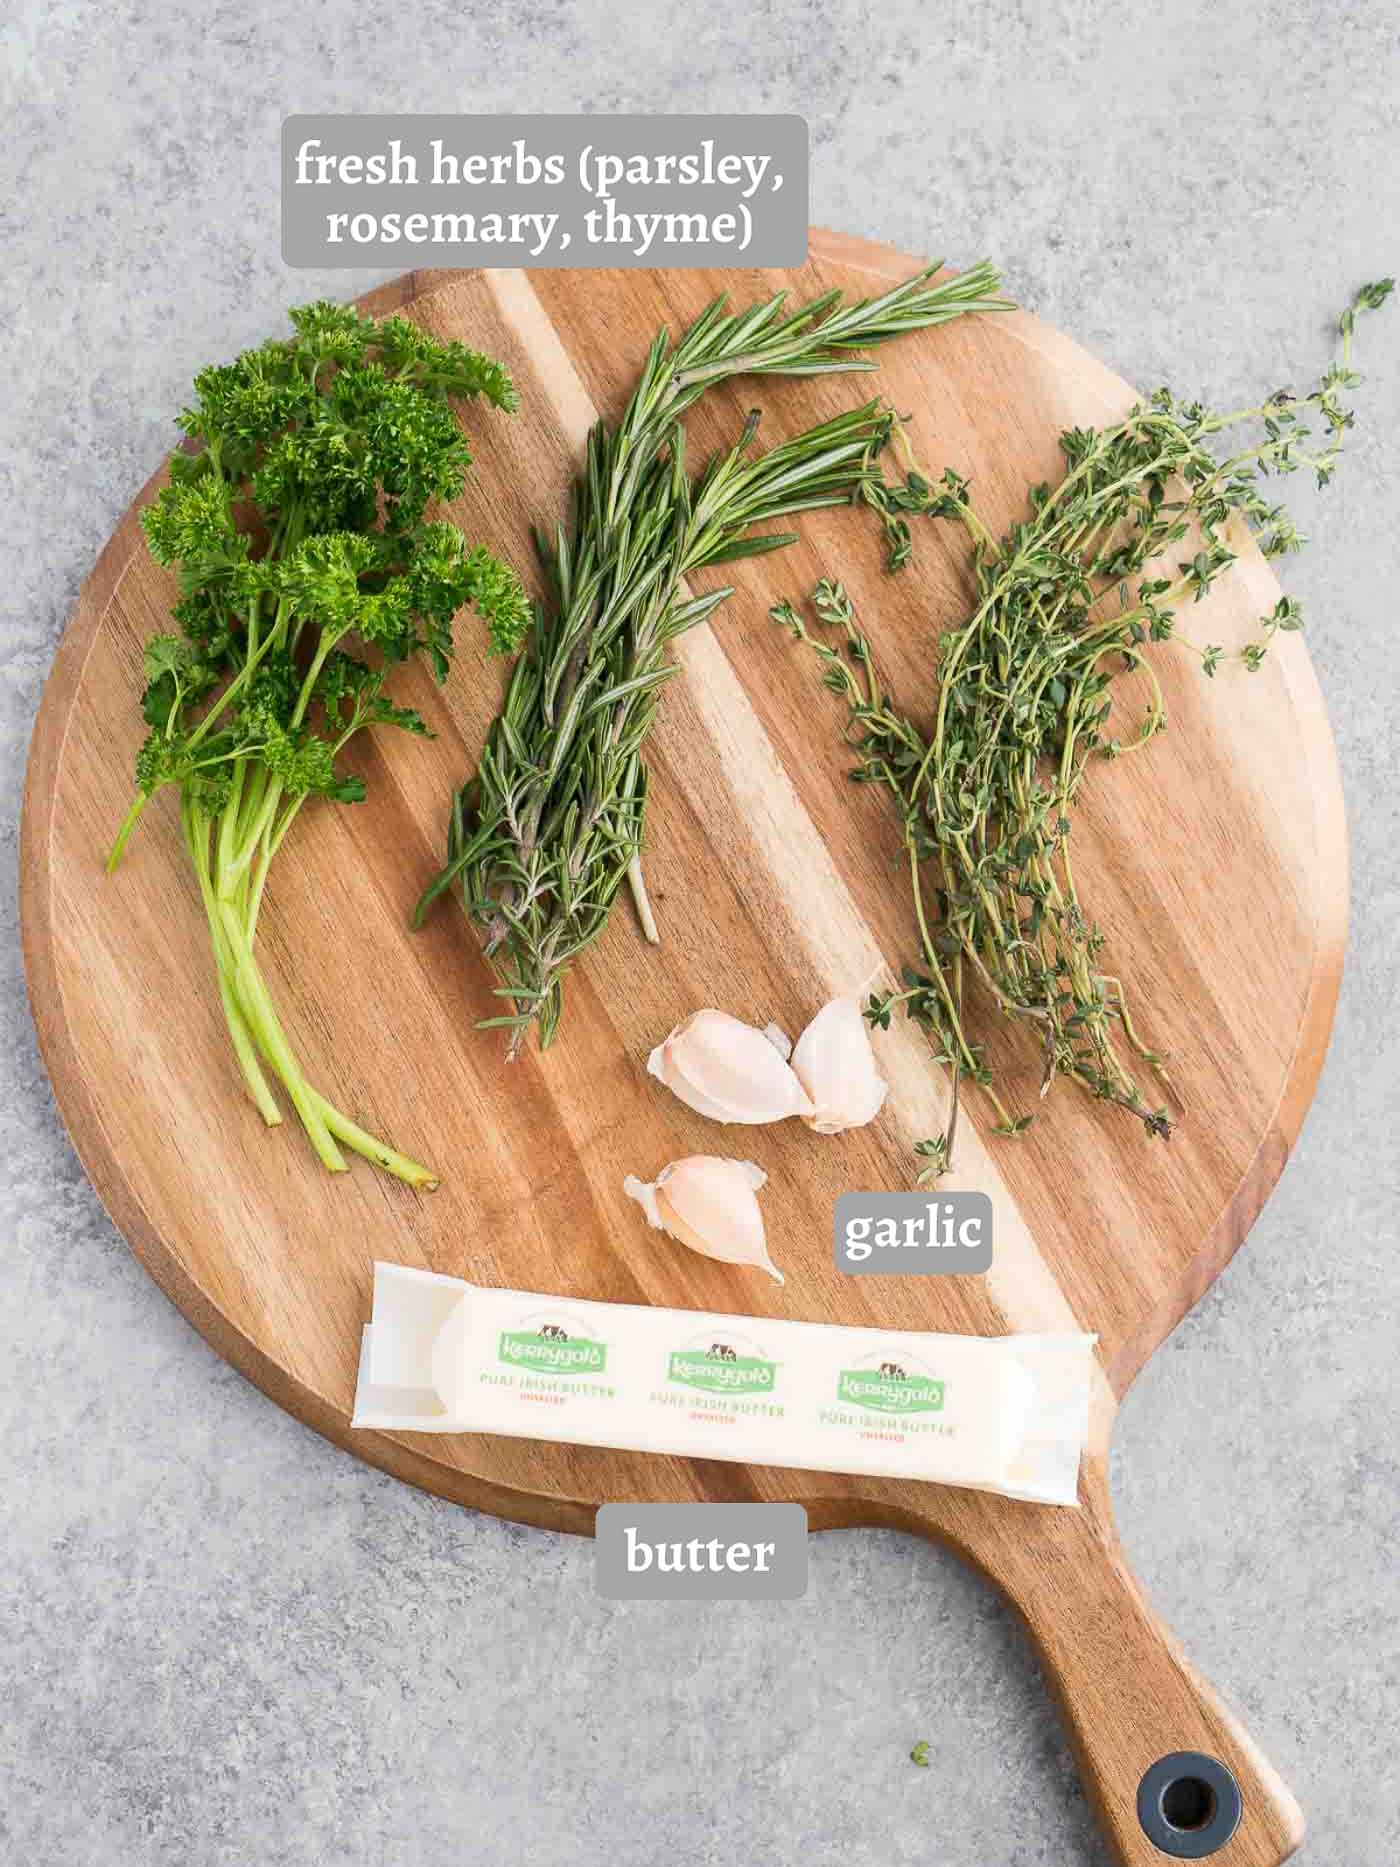 ingredients for garlic herb butter